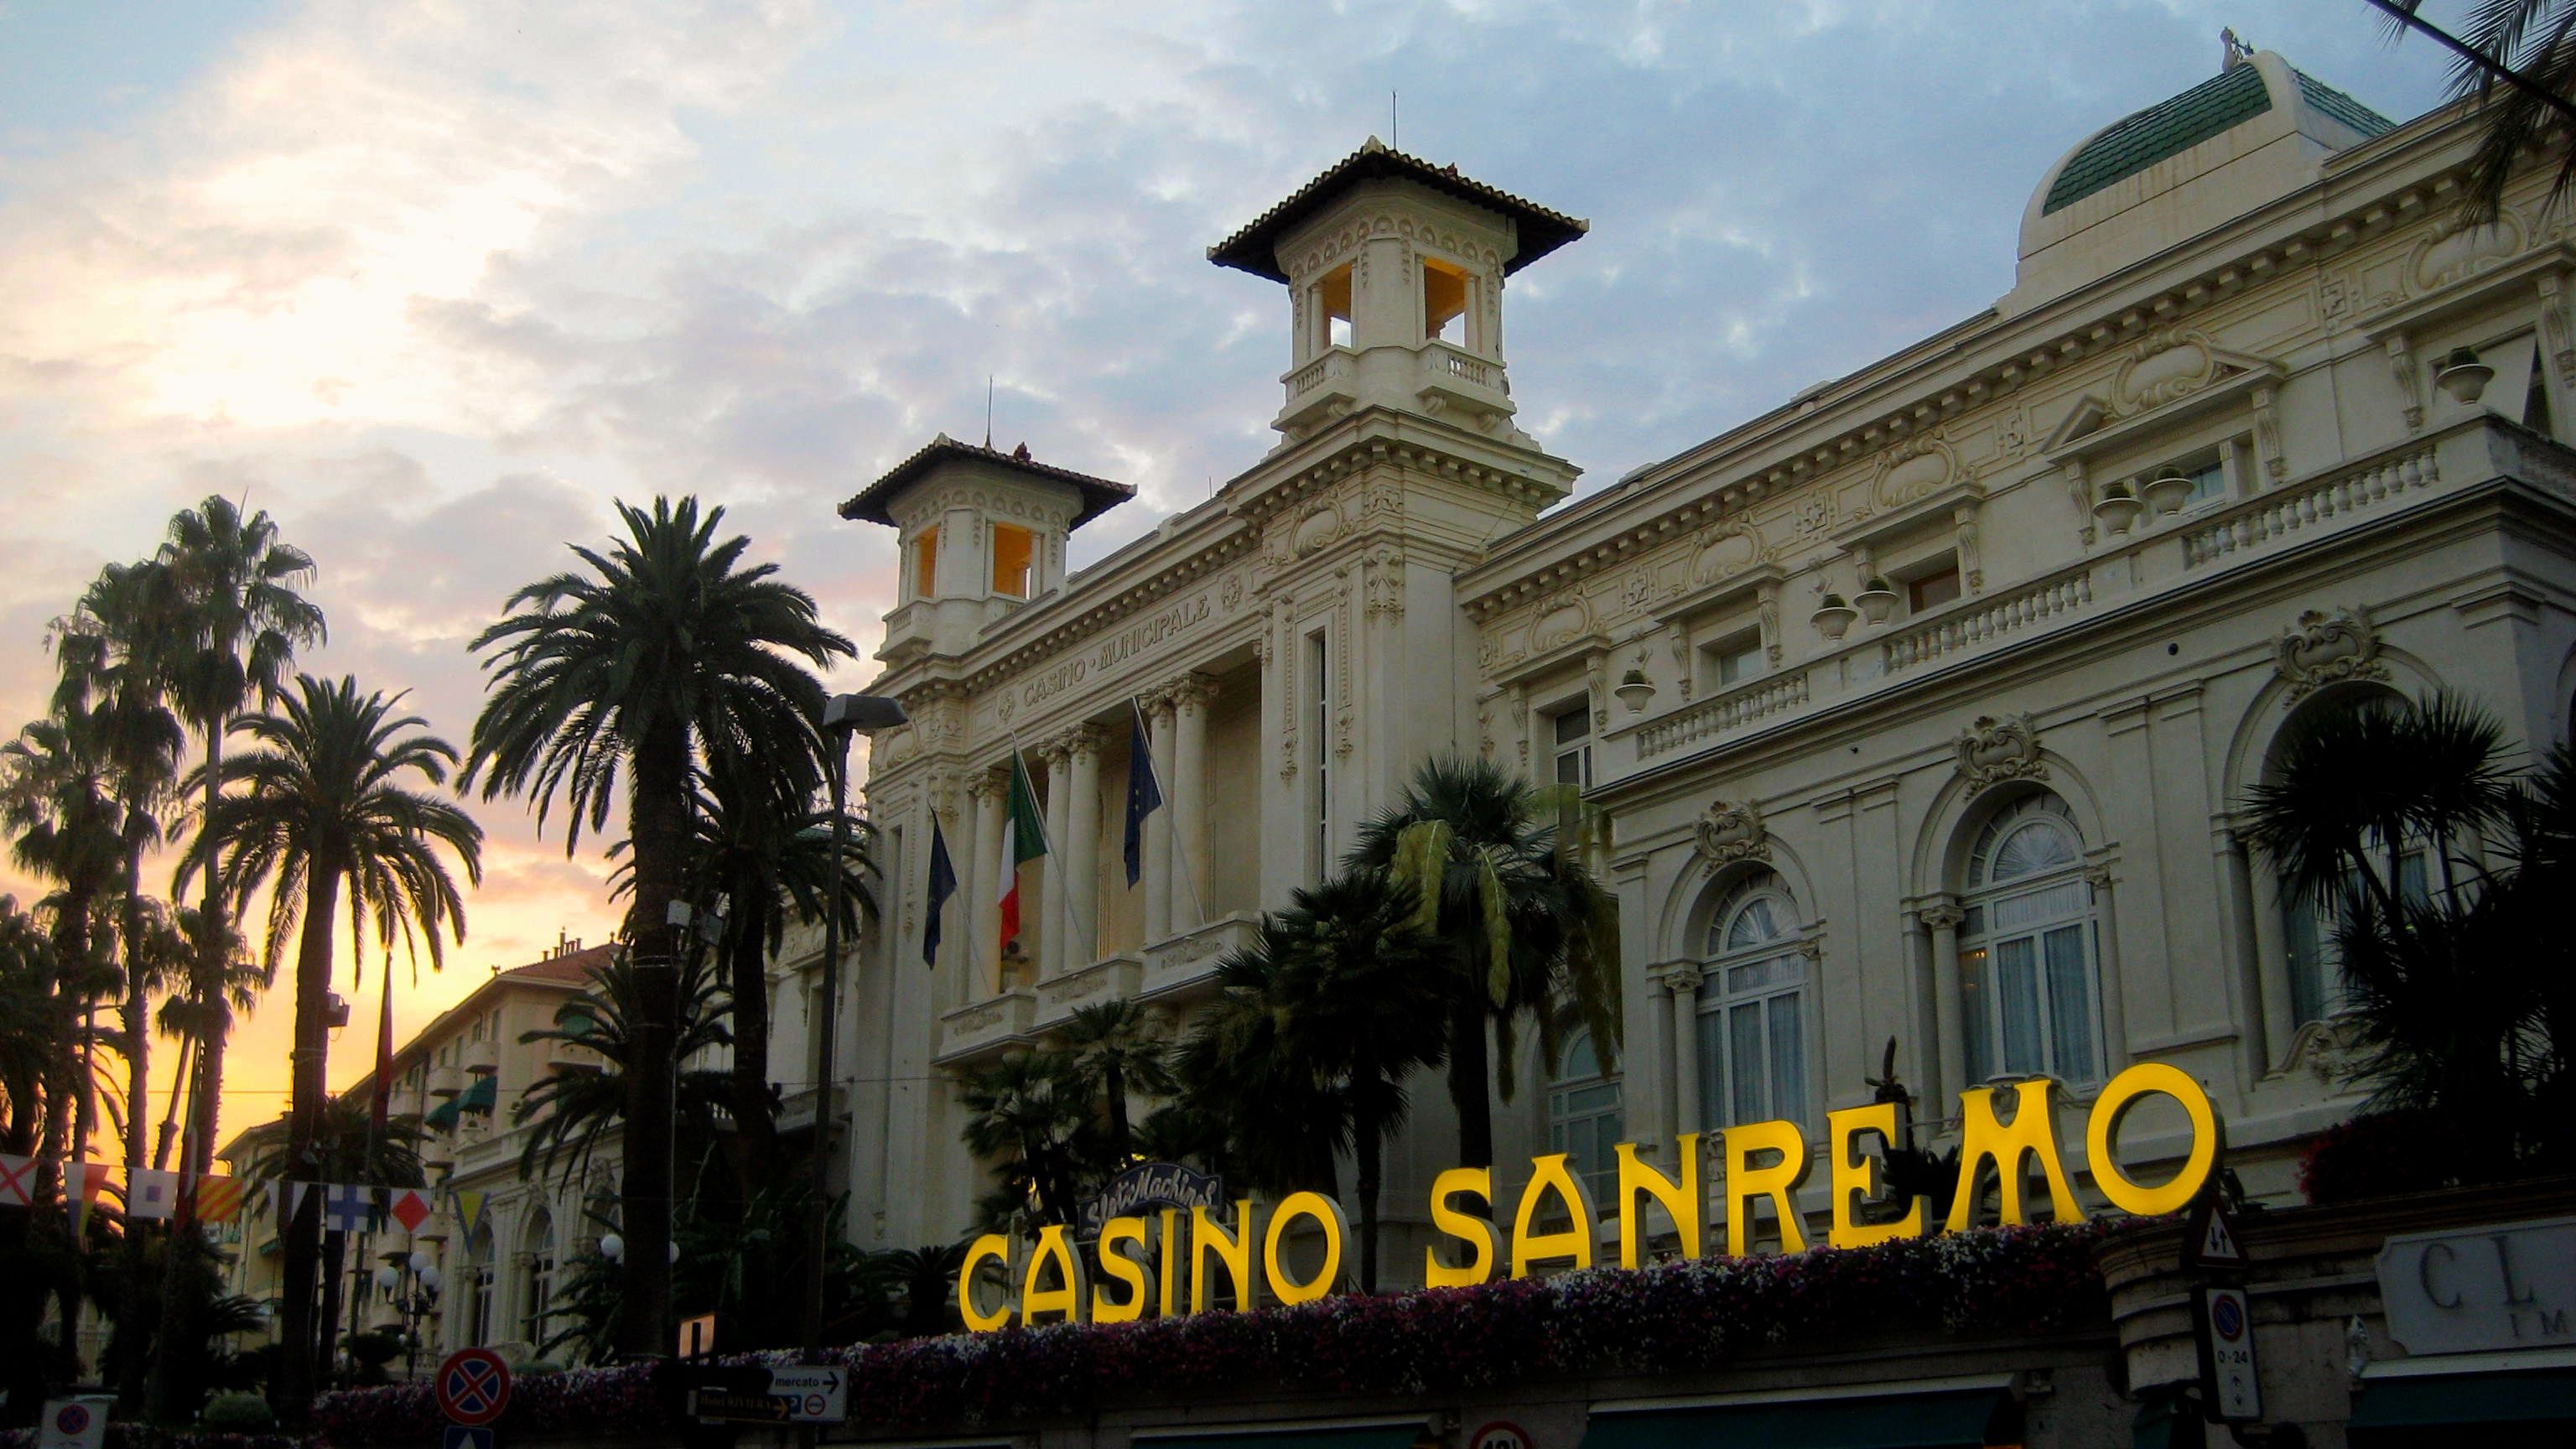 Casino' Sanremo Italy #Sanremo#Italy | Sanremo Italy | Pinterest | Italy